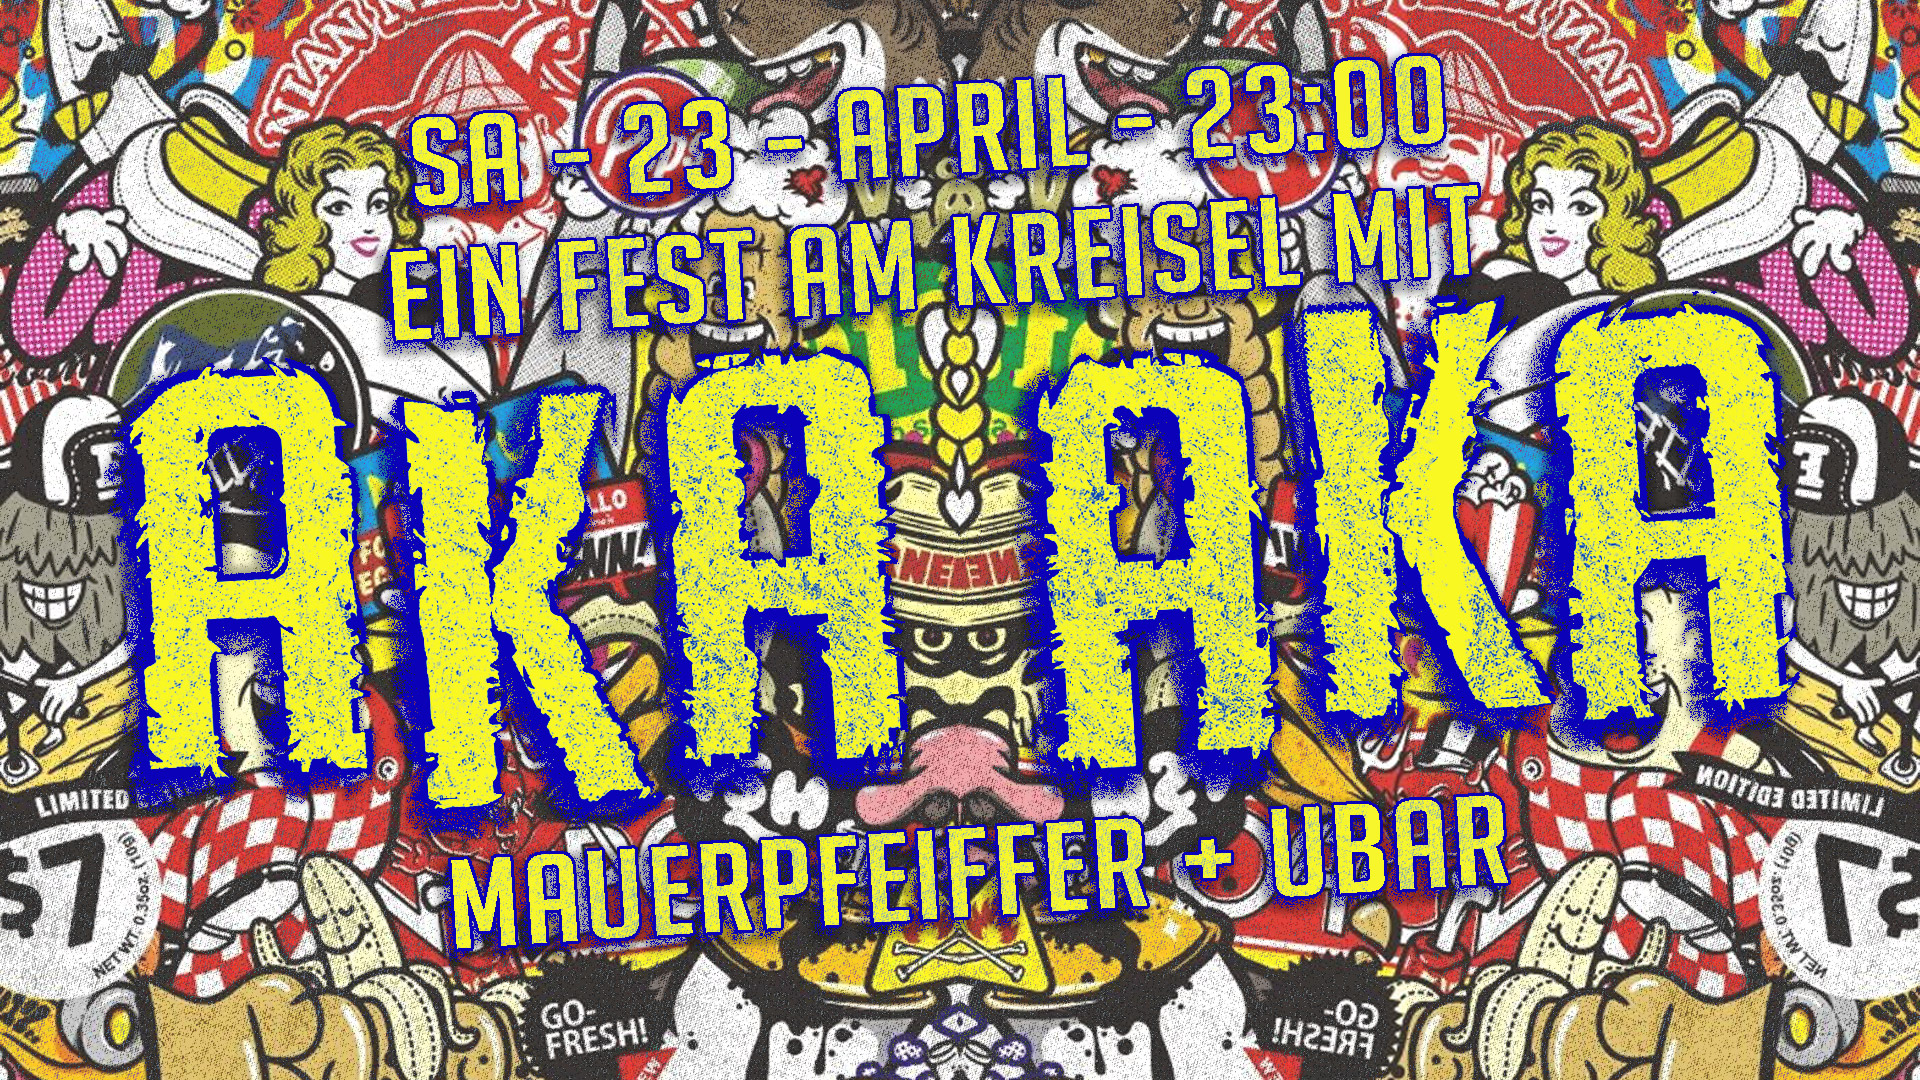 Kreiselfest mit AKA AKA (Berlin) + UBAR Keller Reopening!